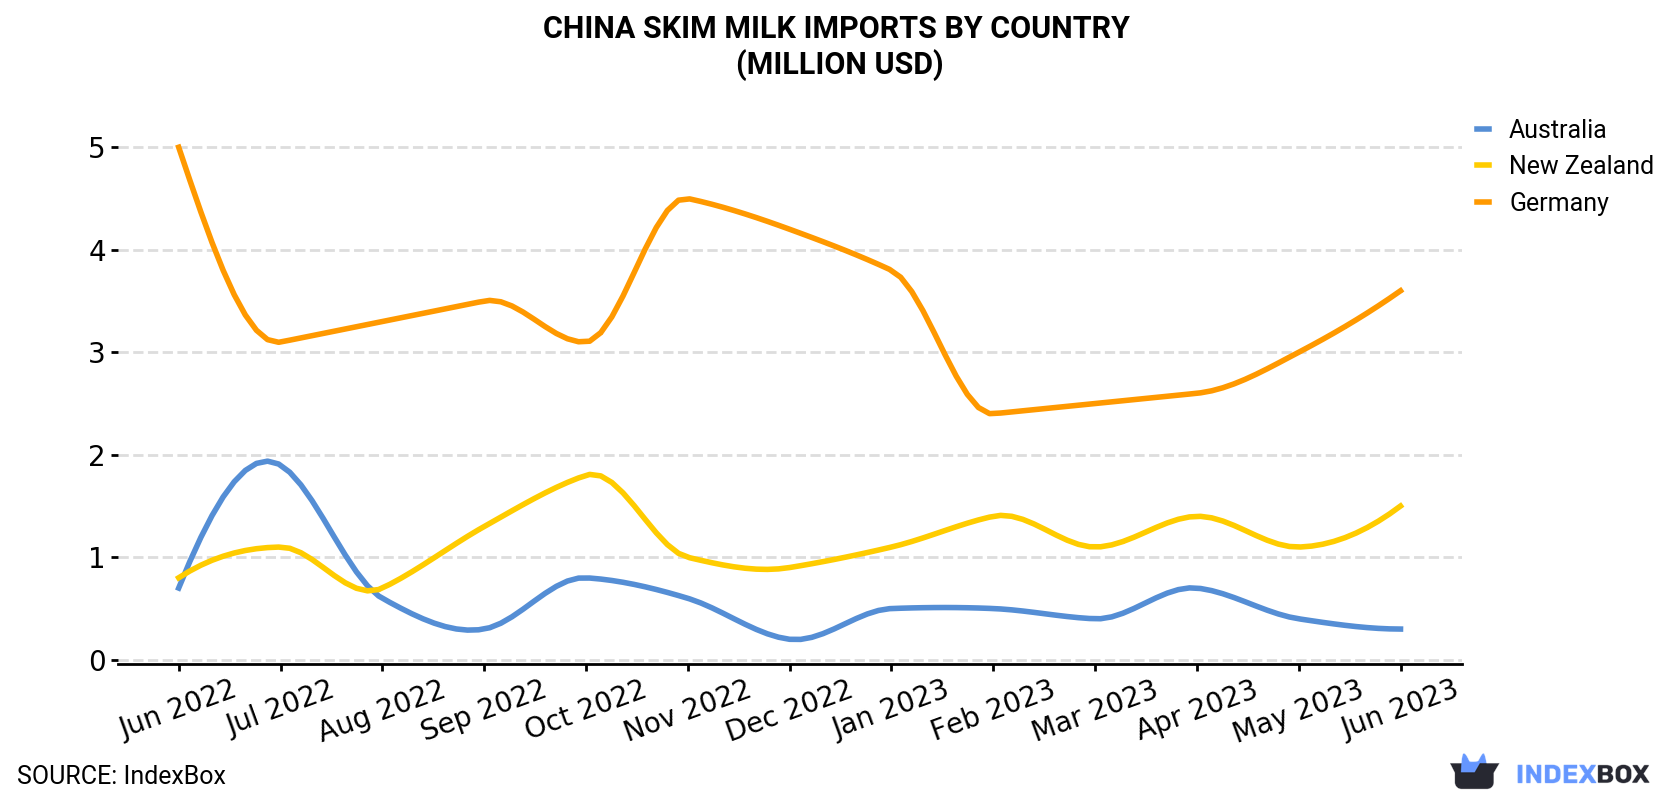 China Skim Milk Imports By Country (Million USD)